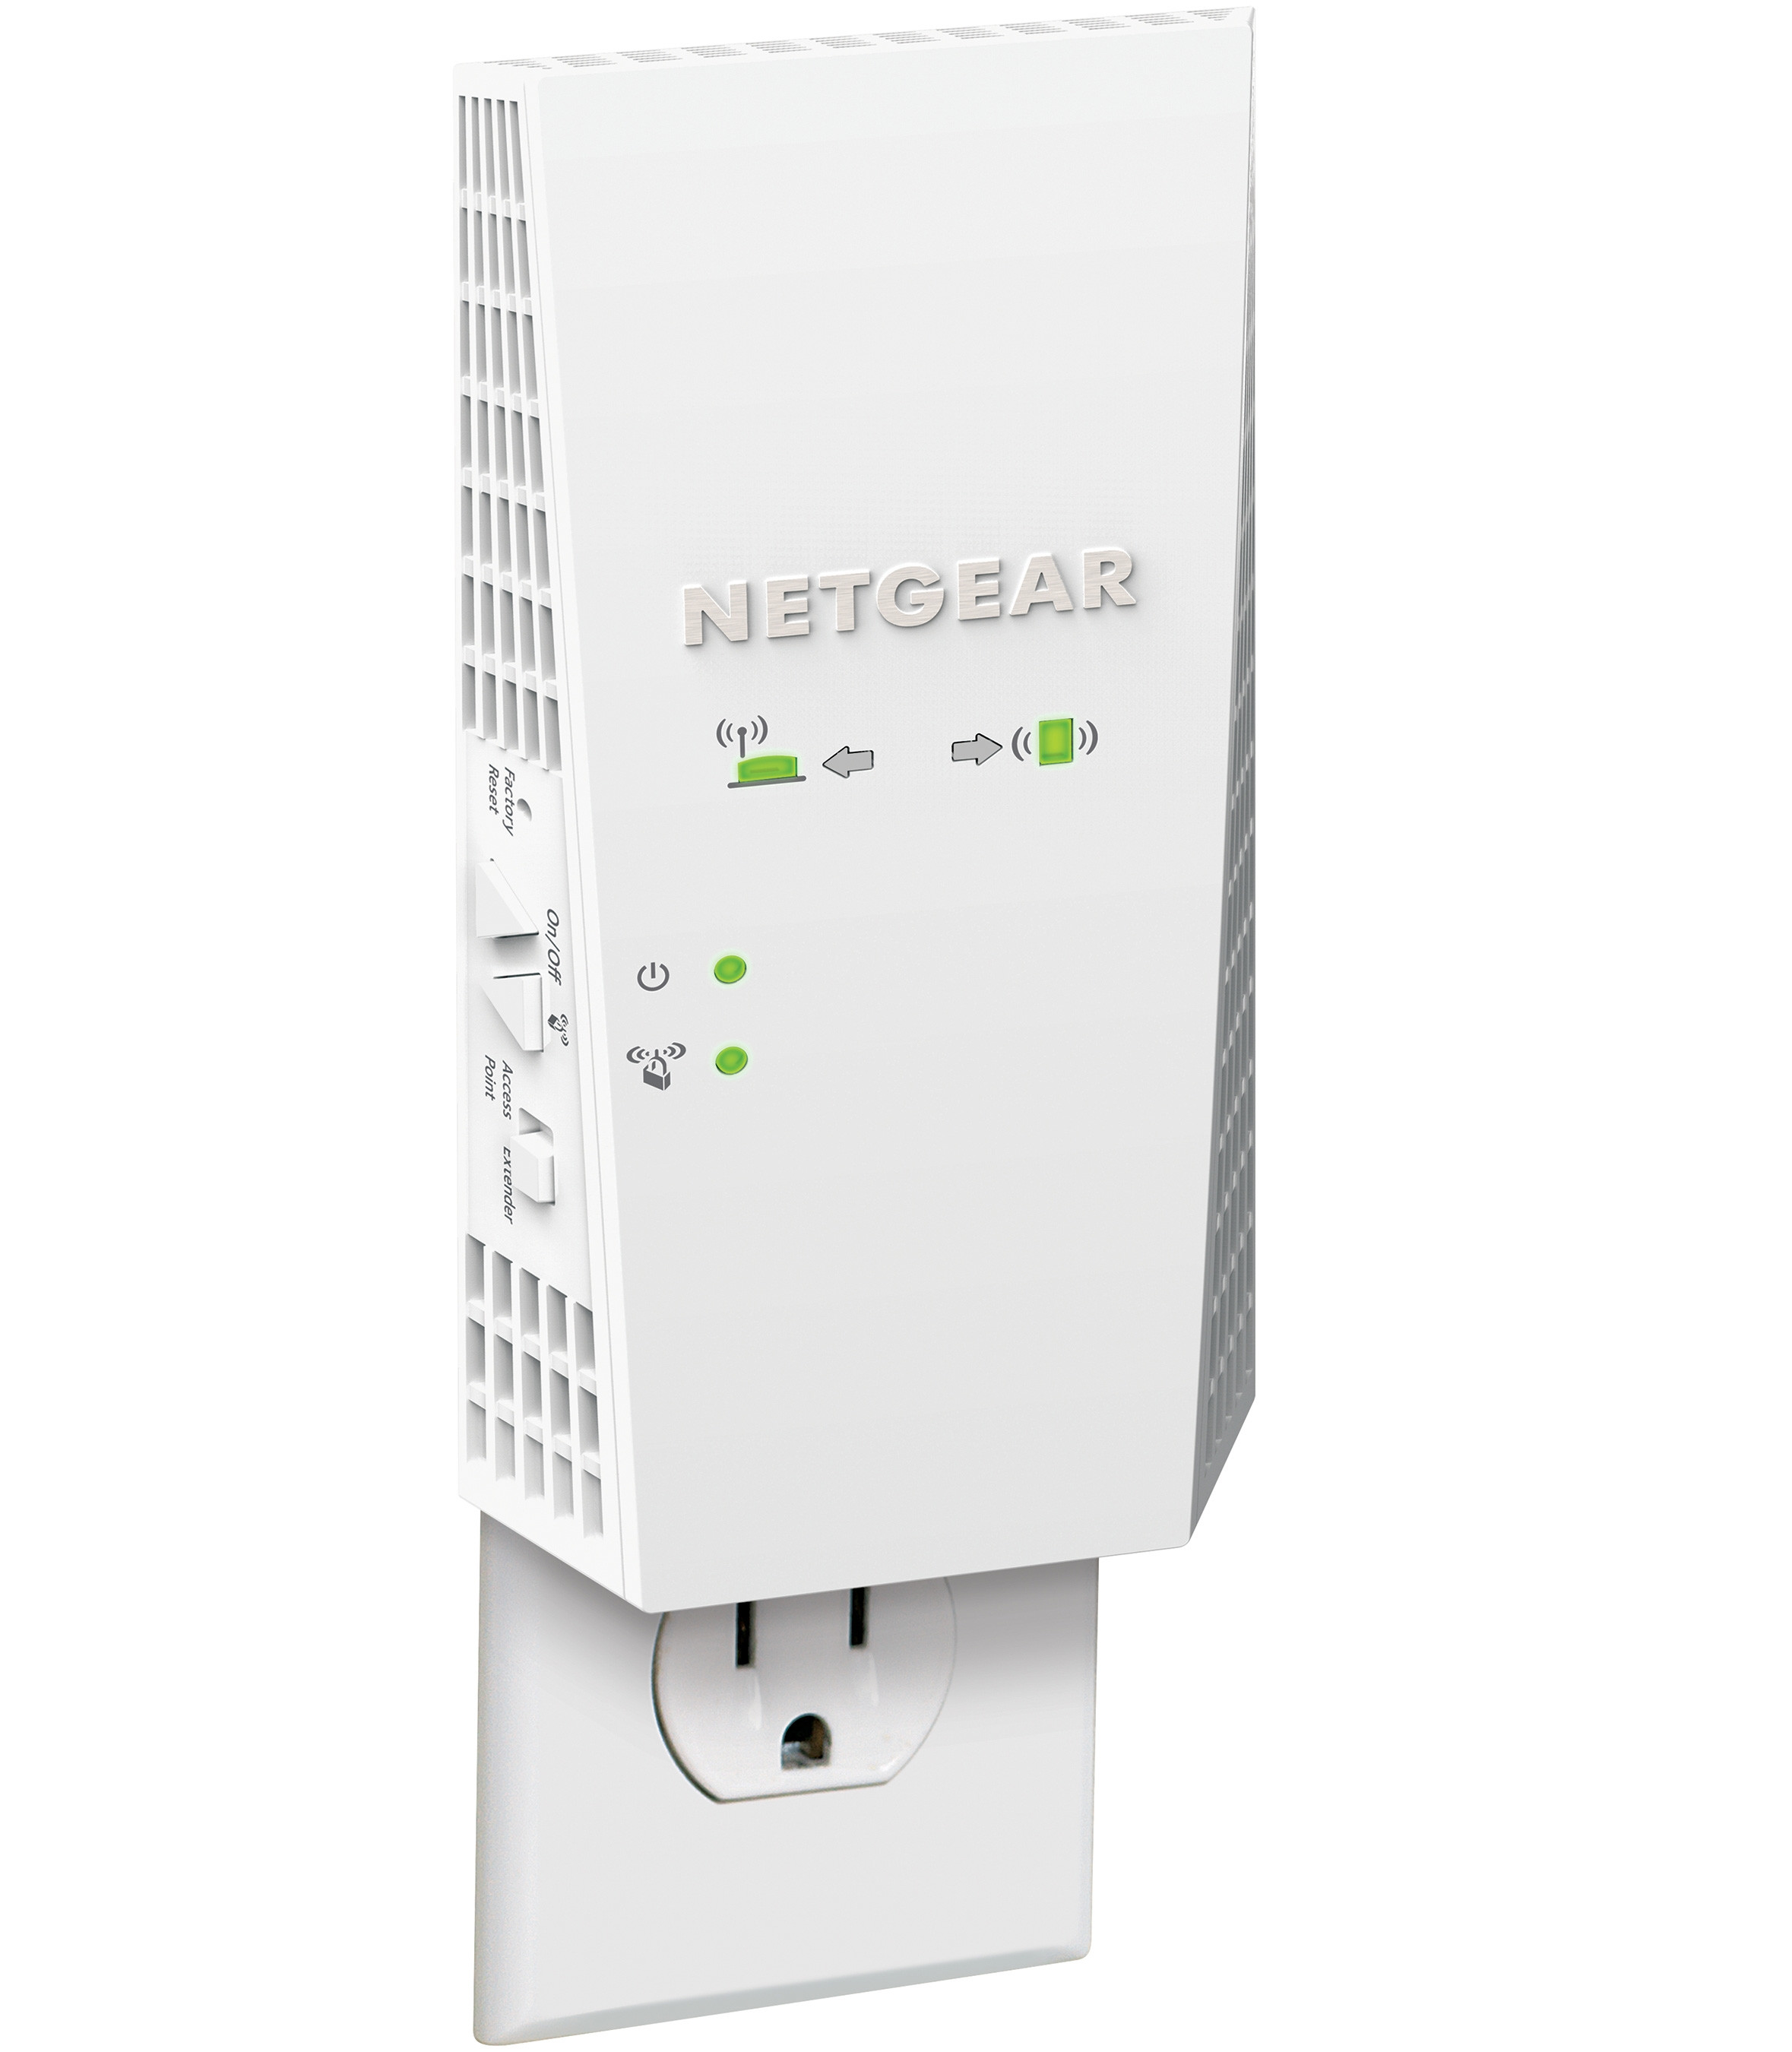 NETGEAR Announces Wall-Plug WiFi Range Extender with 2.2 Gbps Bandwidth